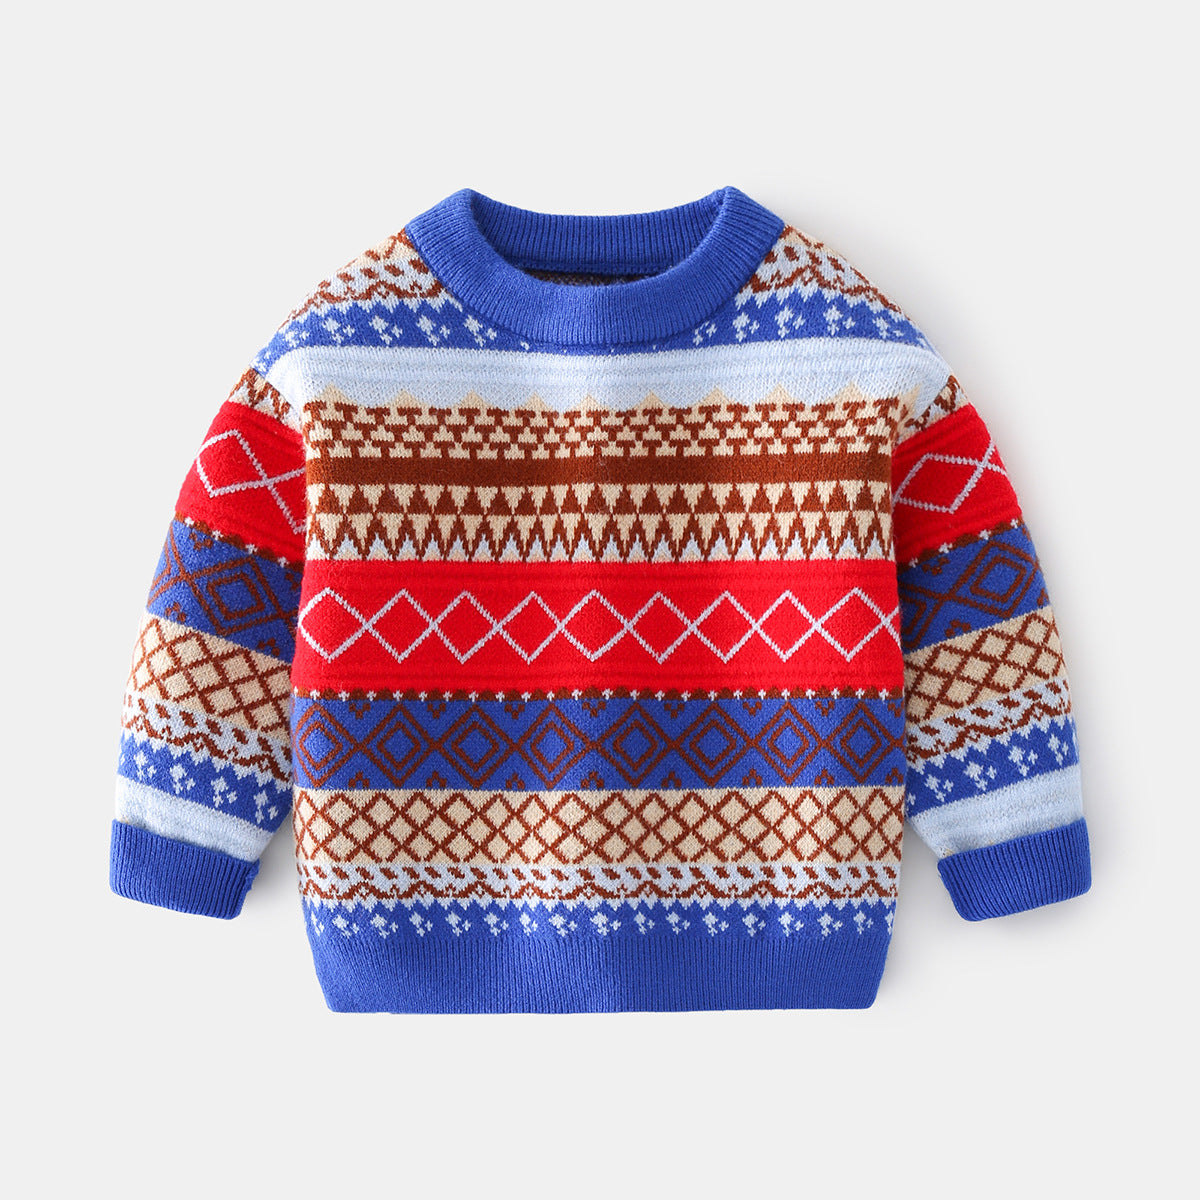 [513588] - Atasan Sweater Rajut Lengan Panjang Anak Cowok Cewek - Motif Pattern Abstract